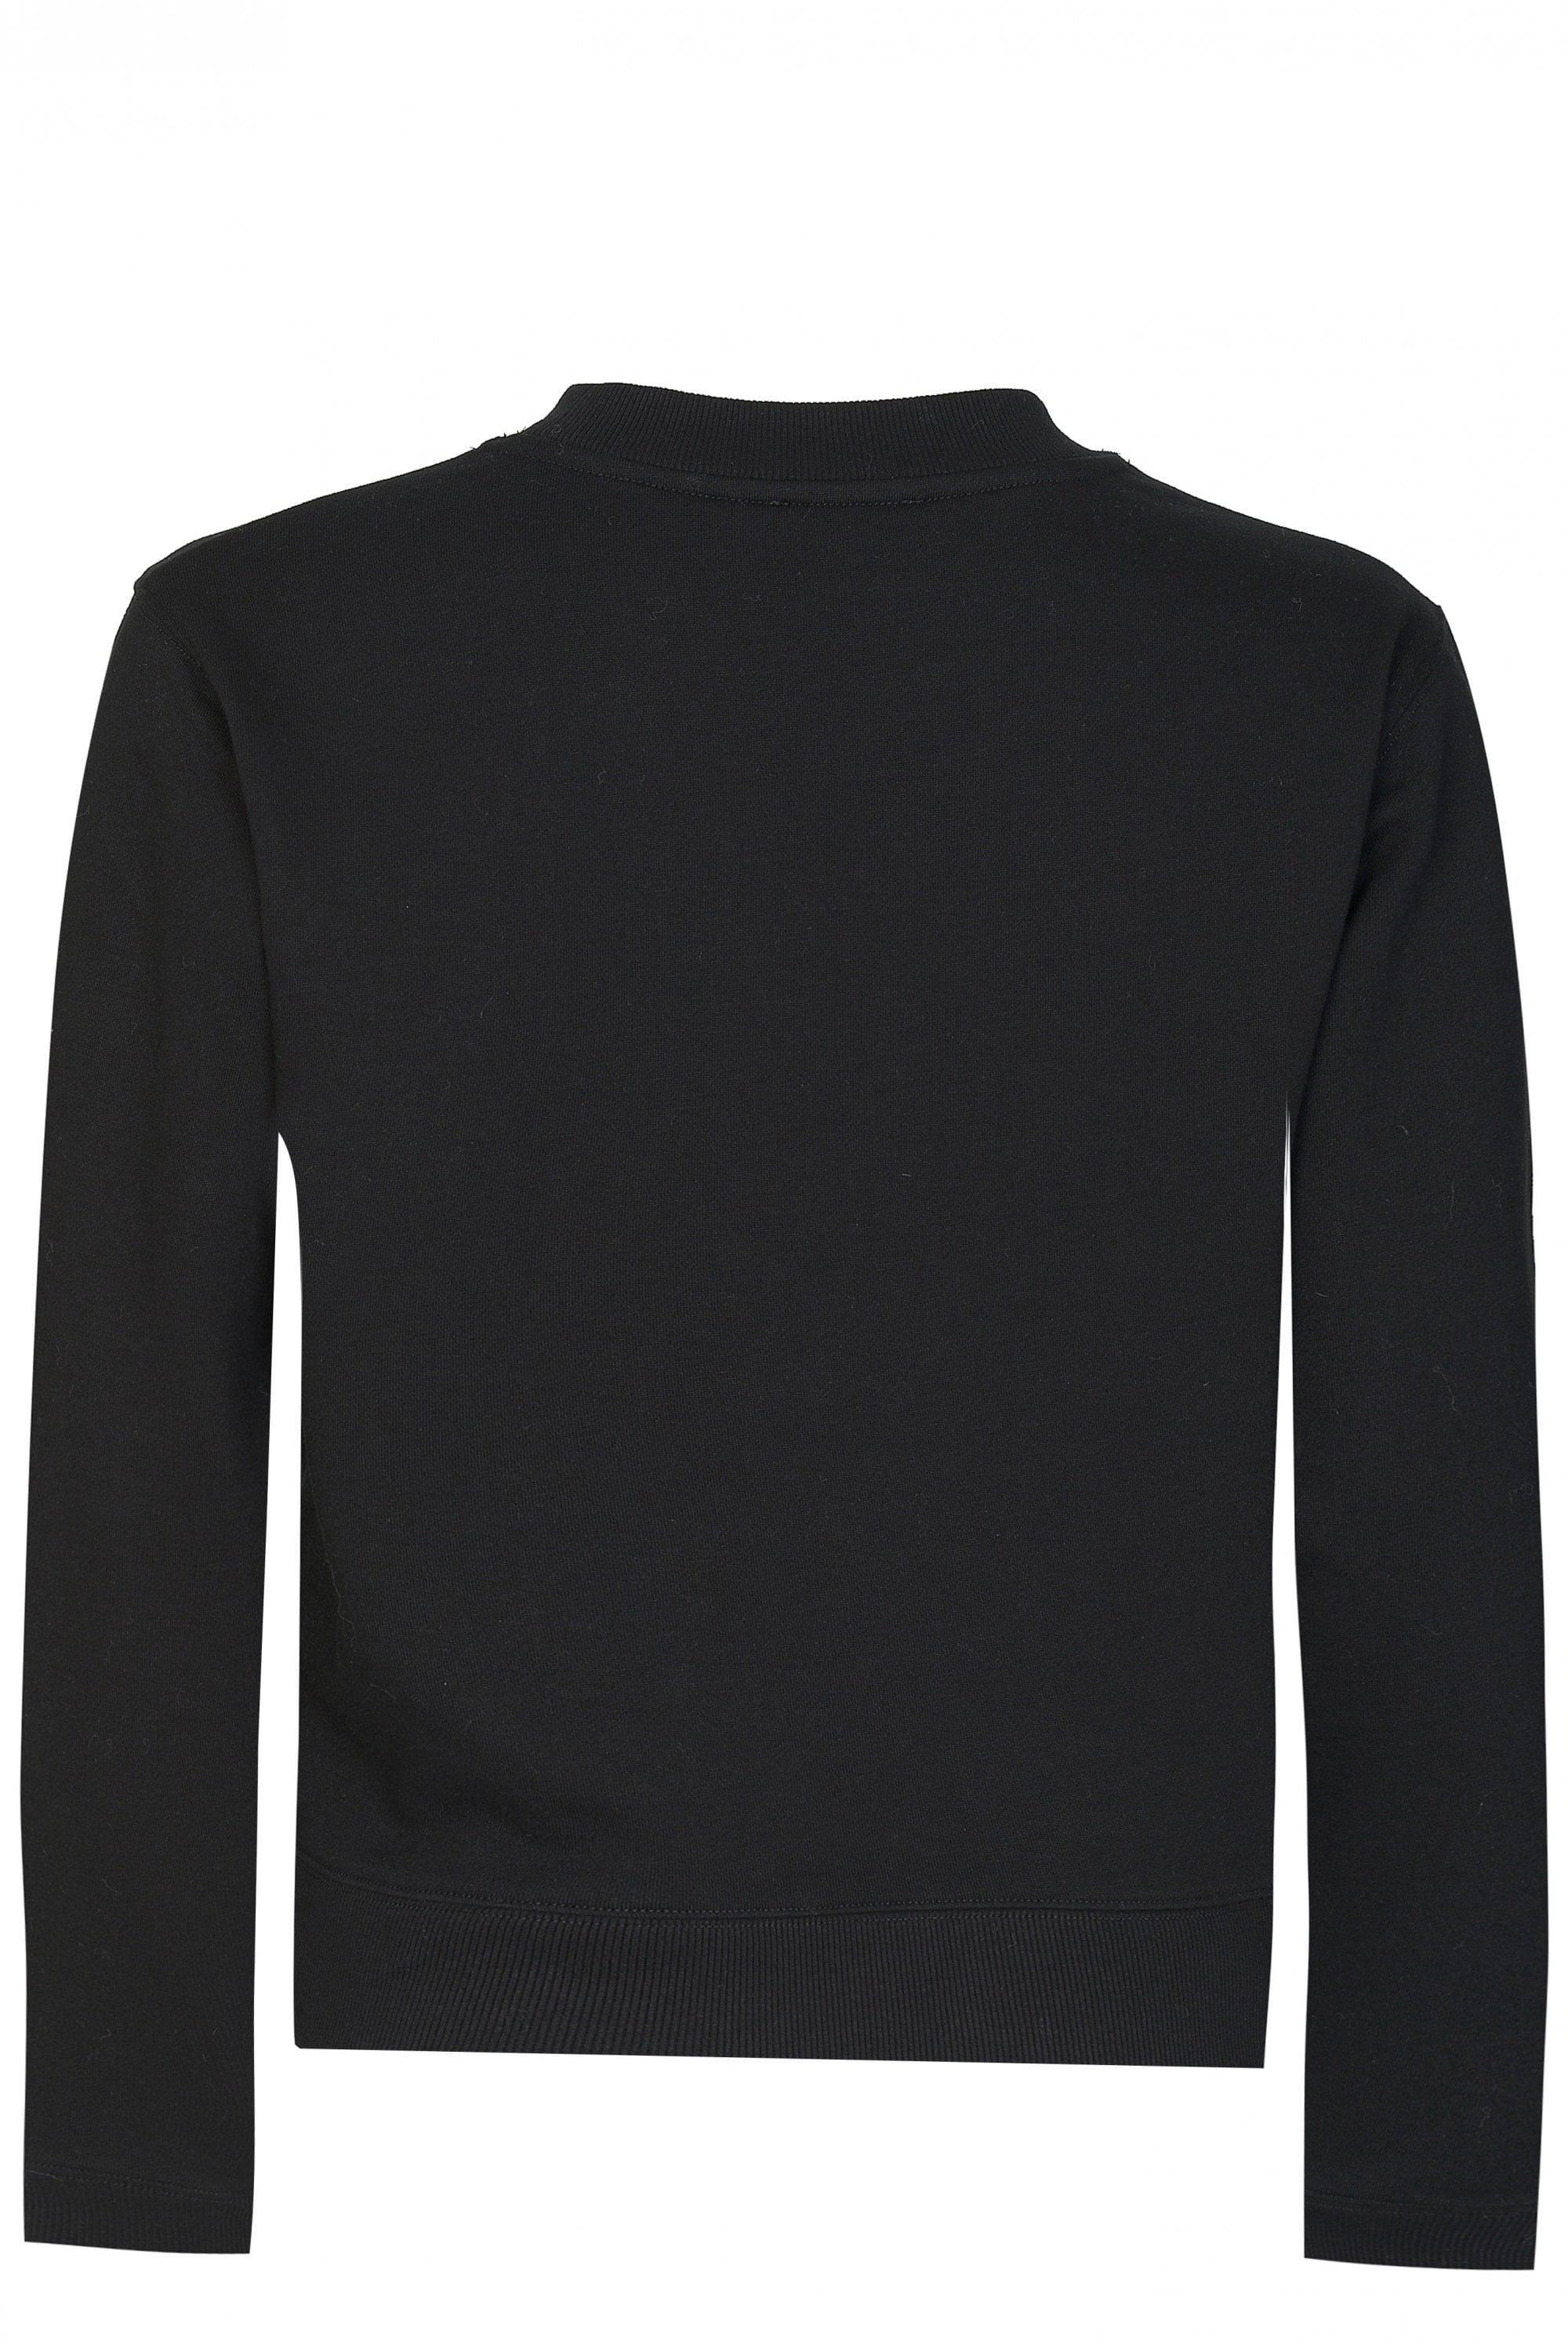 Black Ribbon Logo - Emporio Armani Ribbon Logo Sweatshirt in Black for Men - Lyst